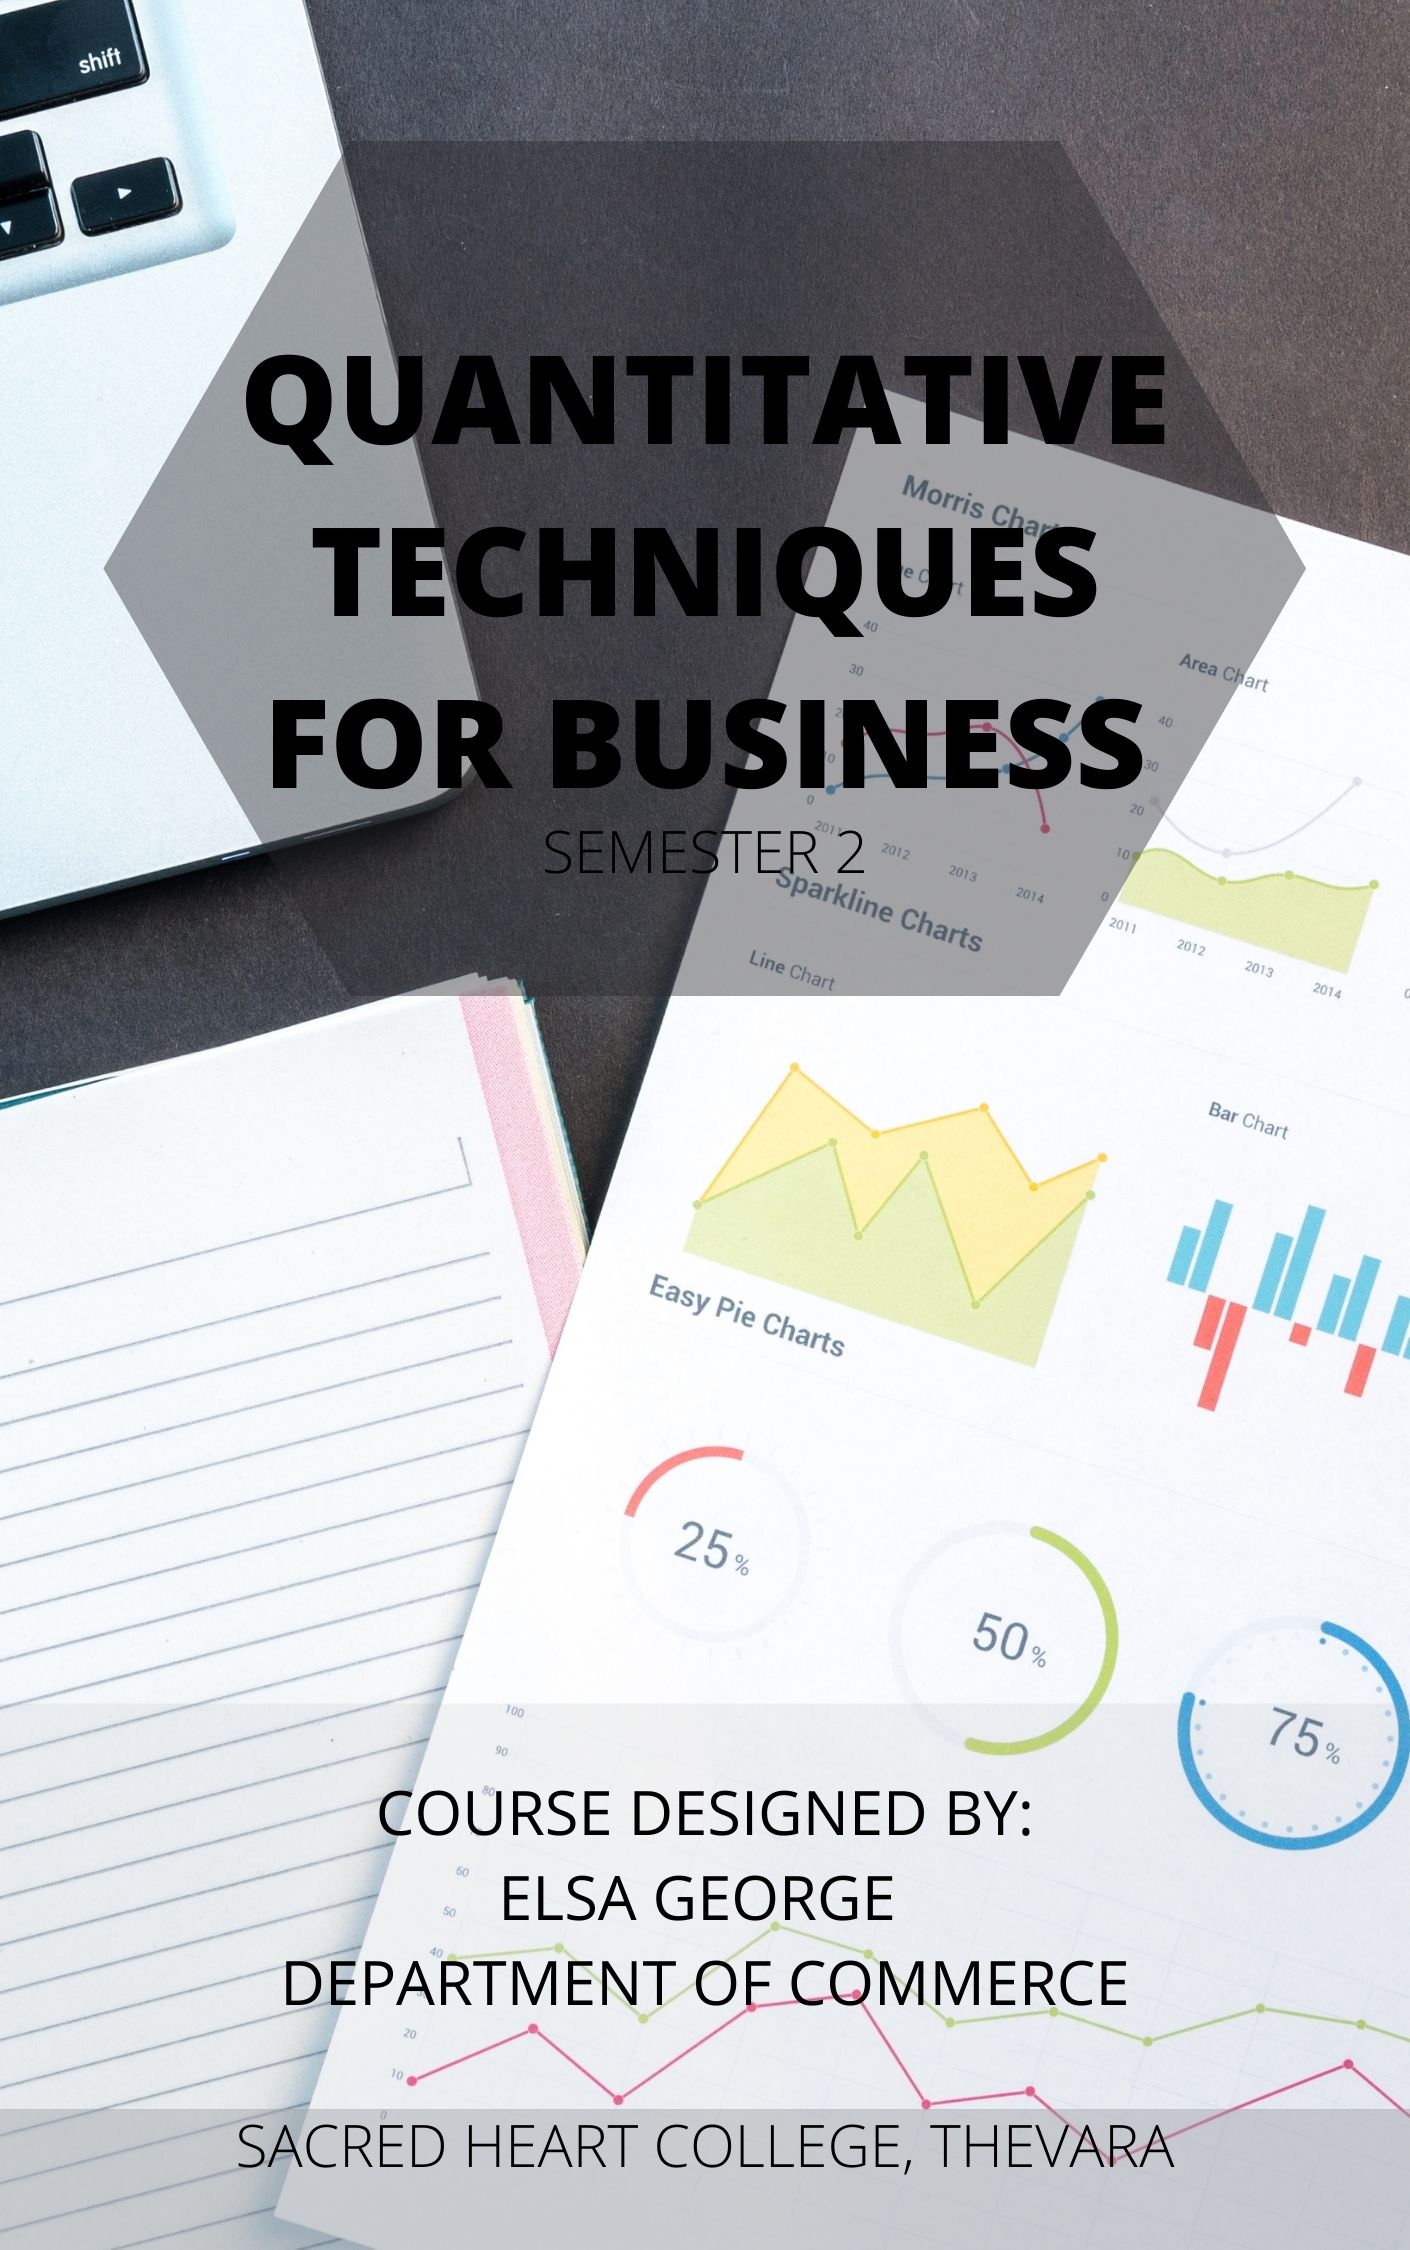 Quantitative techniques for business